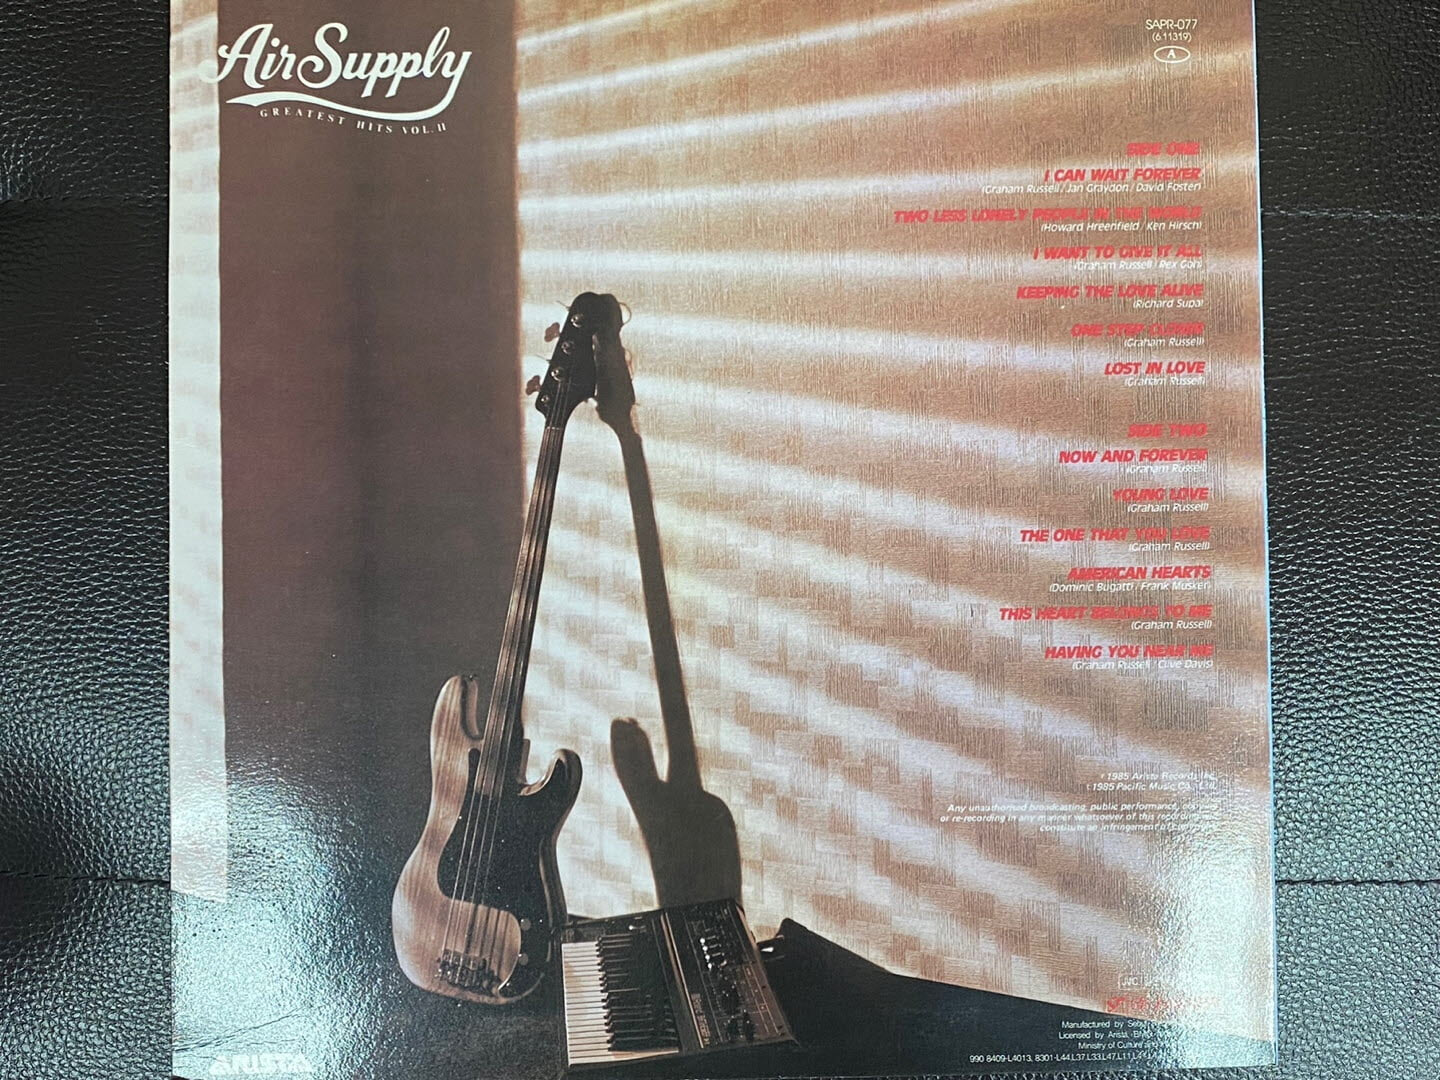 [LP] 에어 서플라이 - Air Supply - Greatest Hits Vol.2 LP [서울-라이센스반]